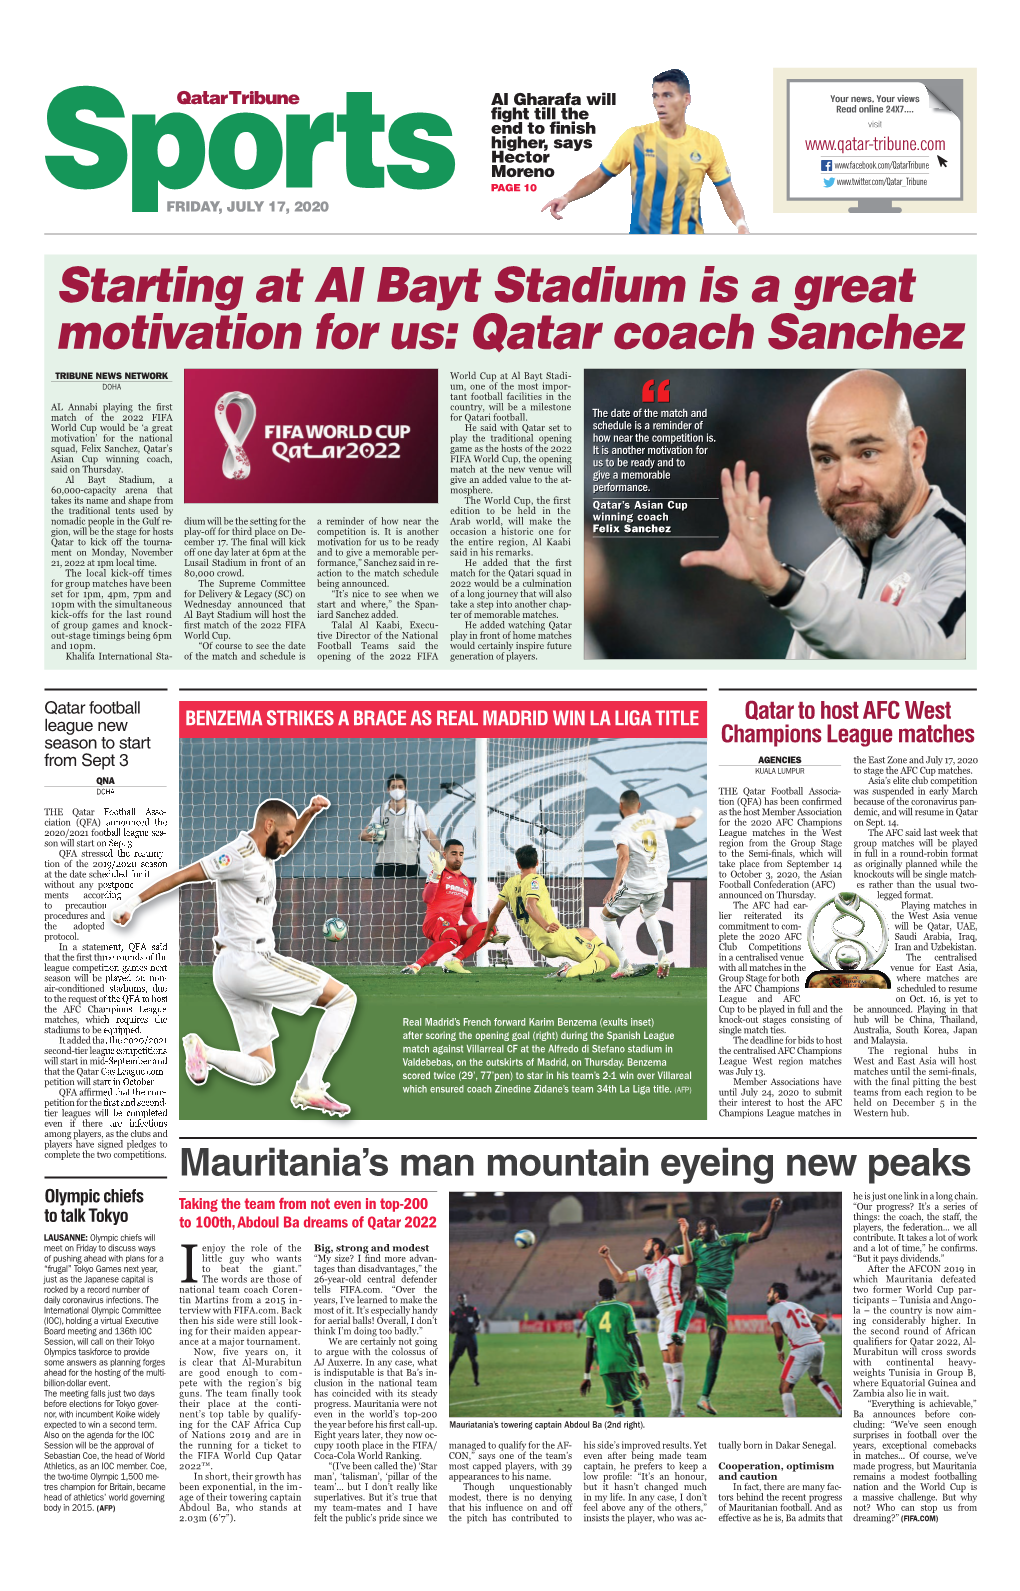 Starting at Al Bayt Stadium Is a Great Motivation for Us: Qatar Coach Sanchez